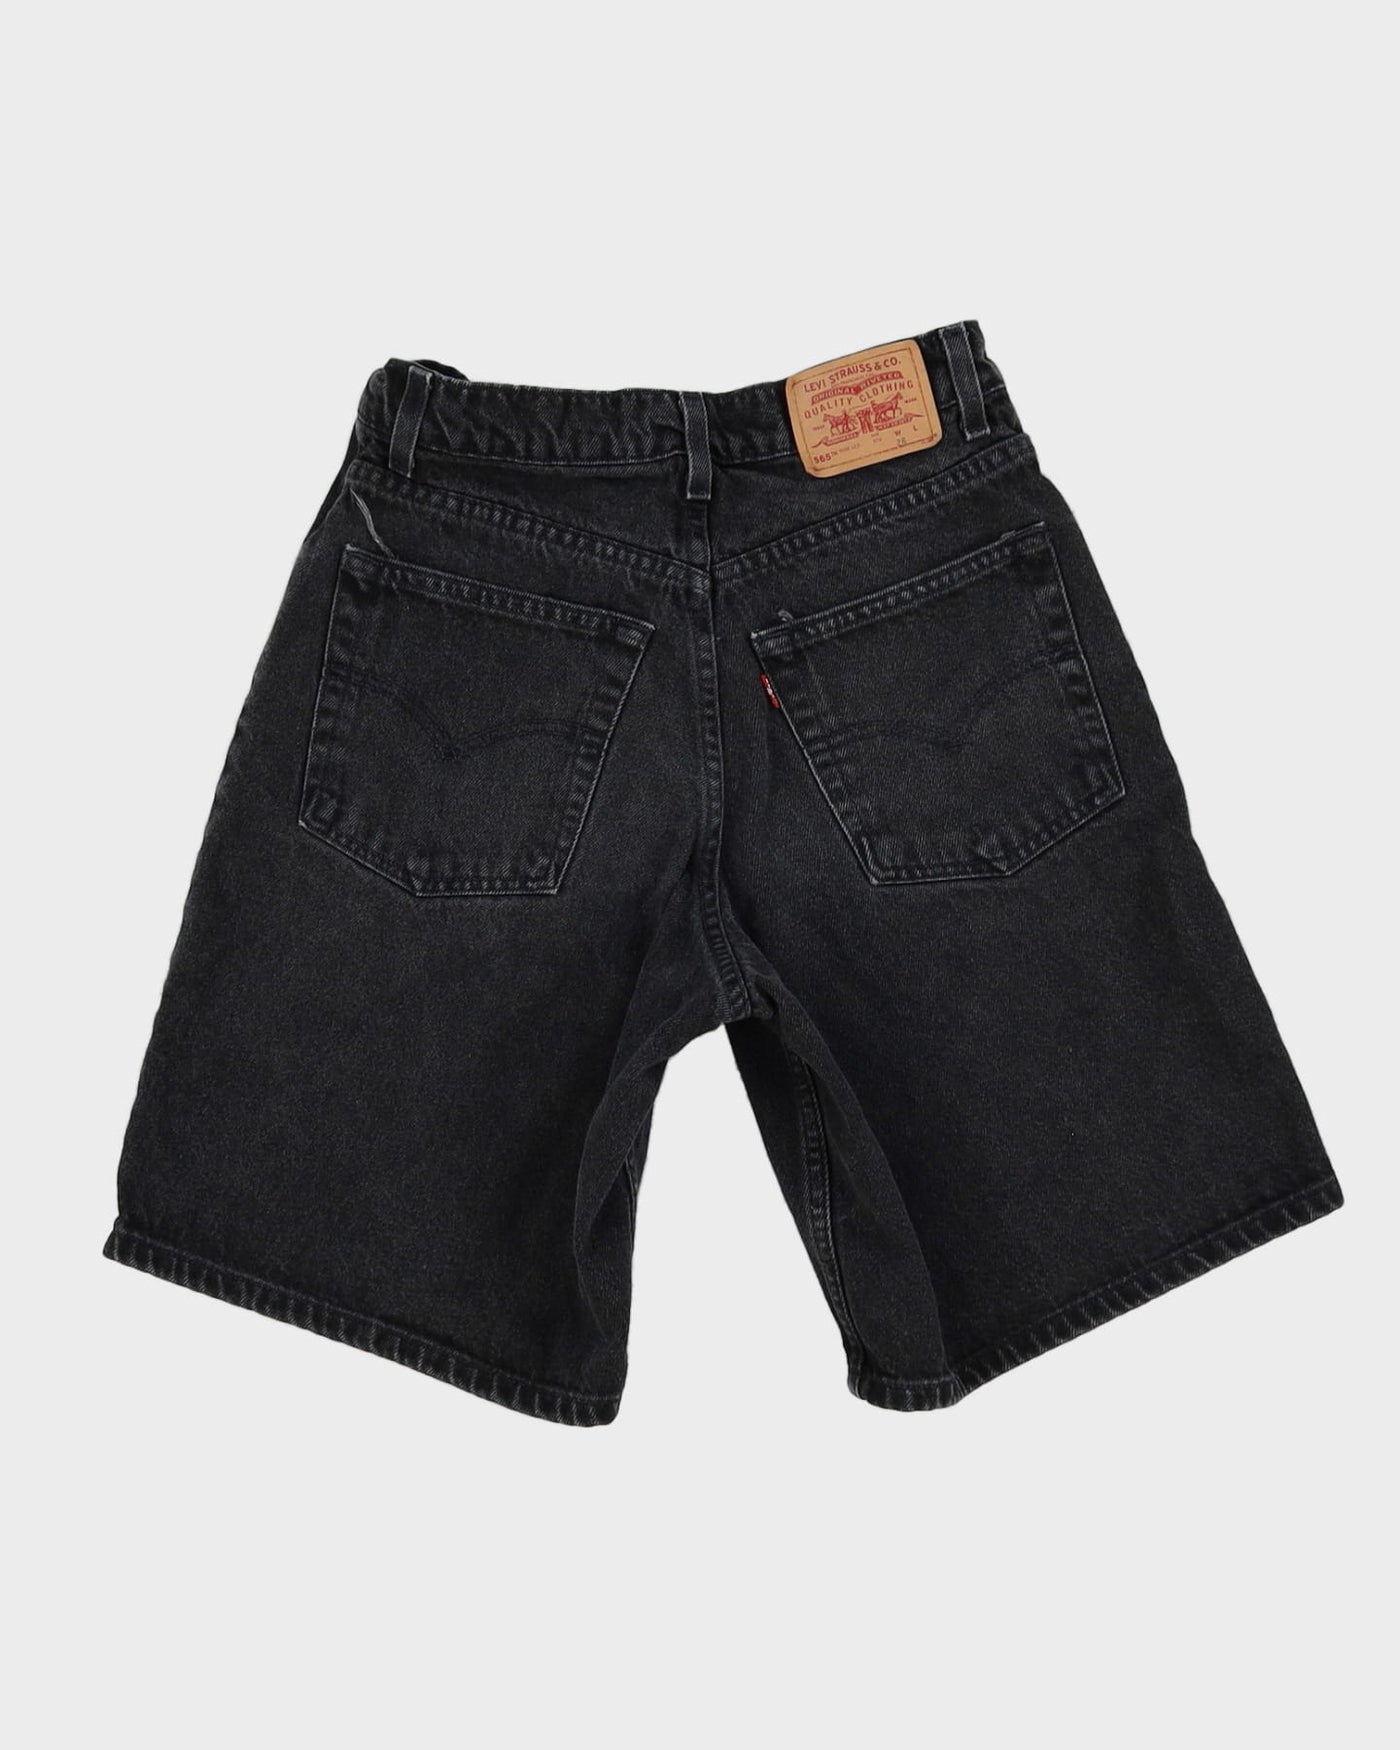 Levi's Black Denim Shorts - W26